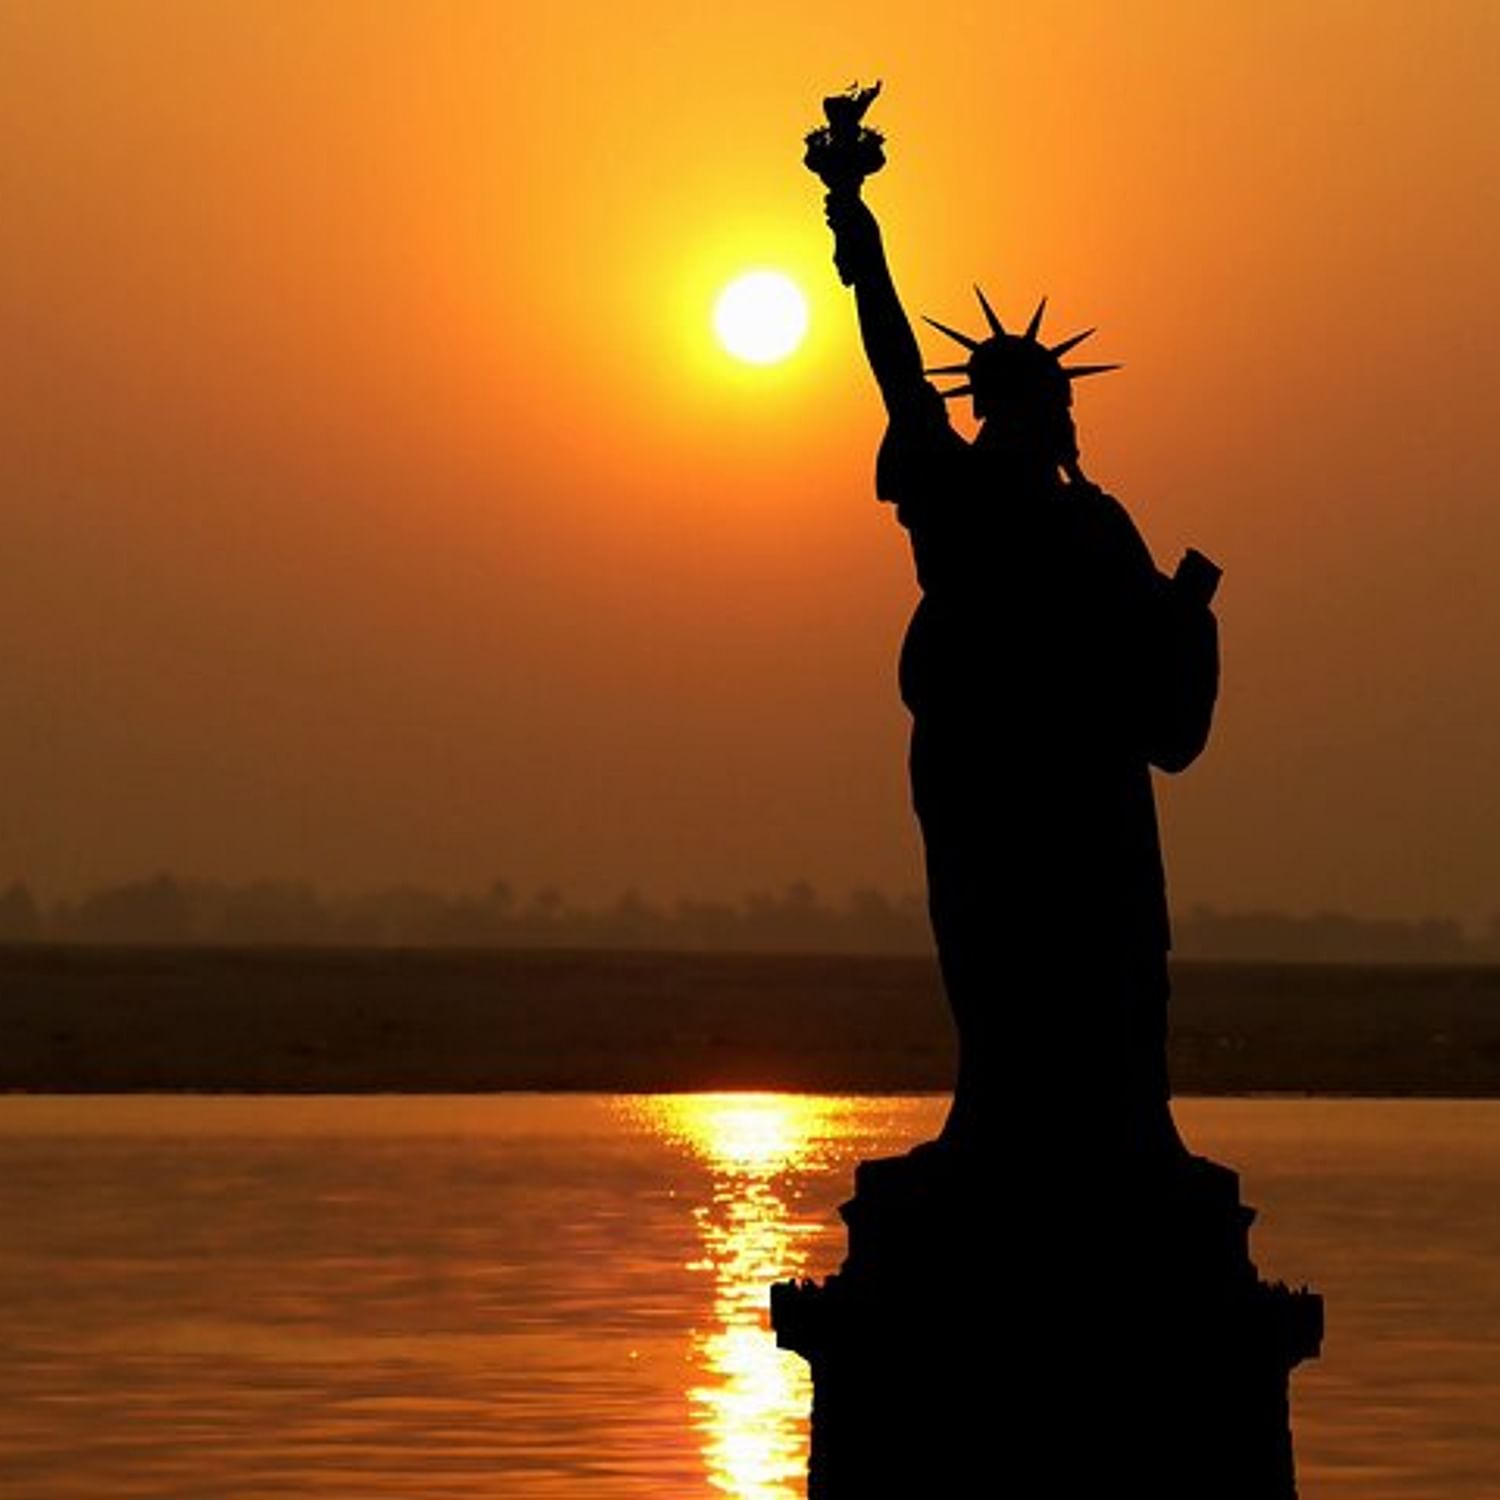 new york dinner cruise statue of liberty